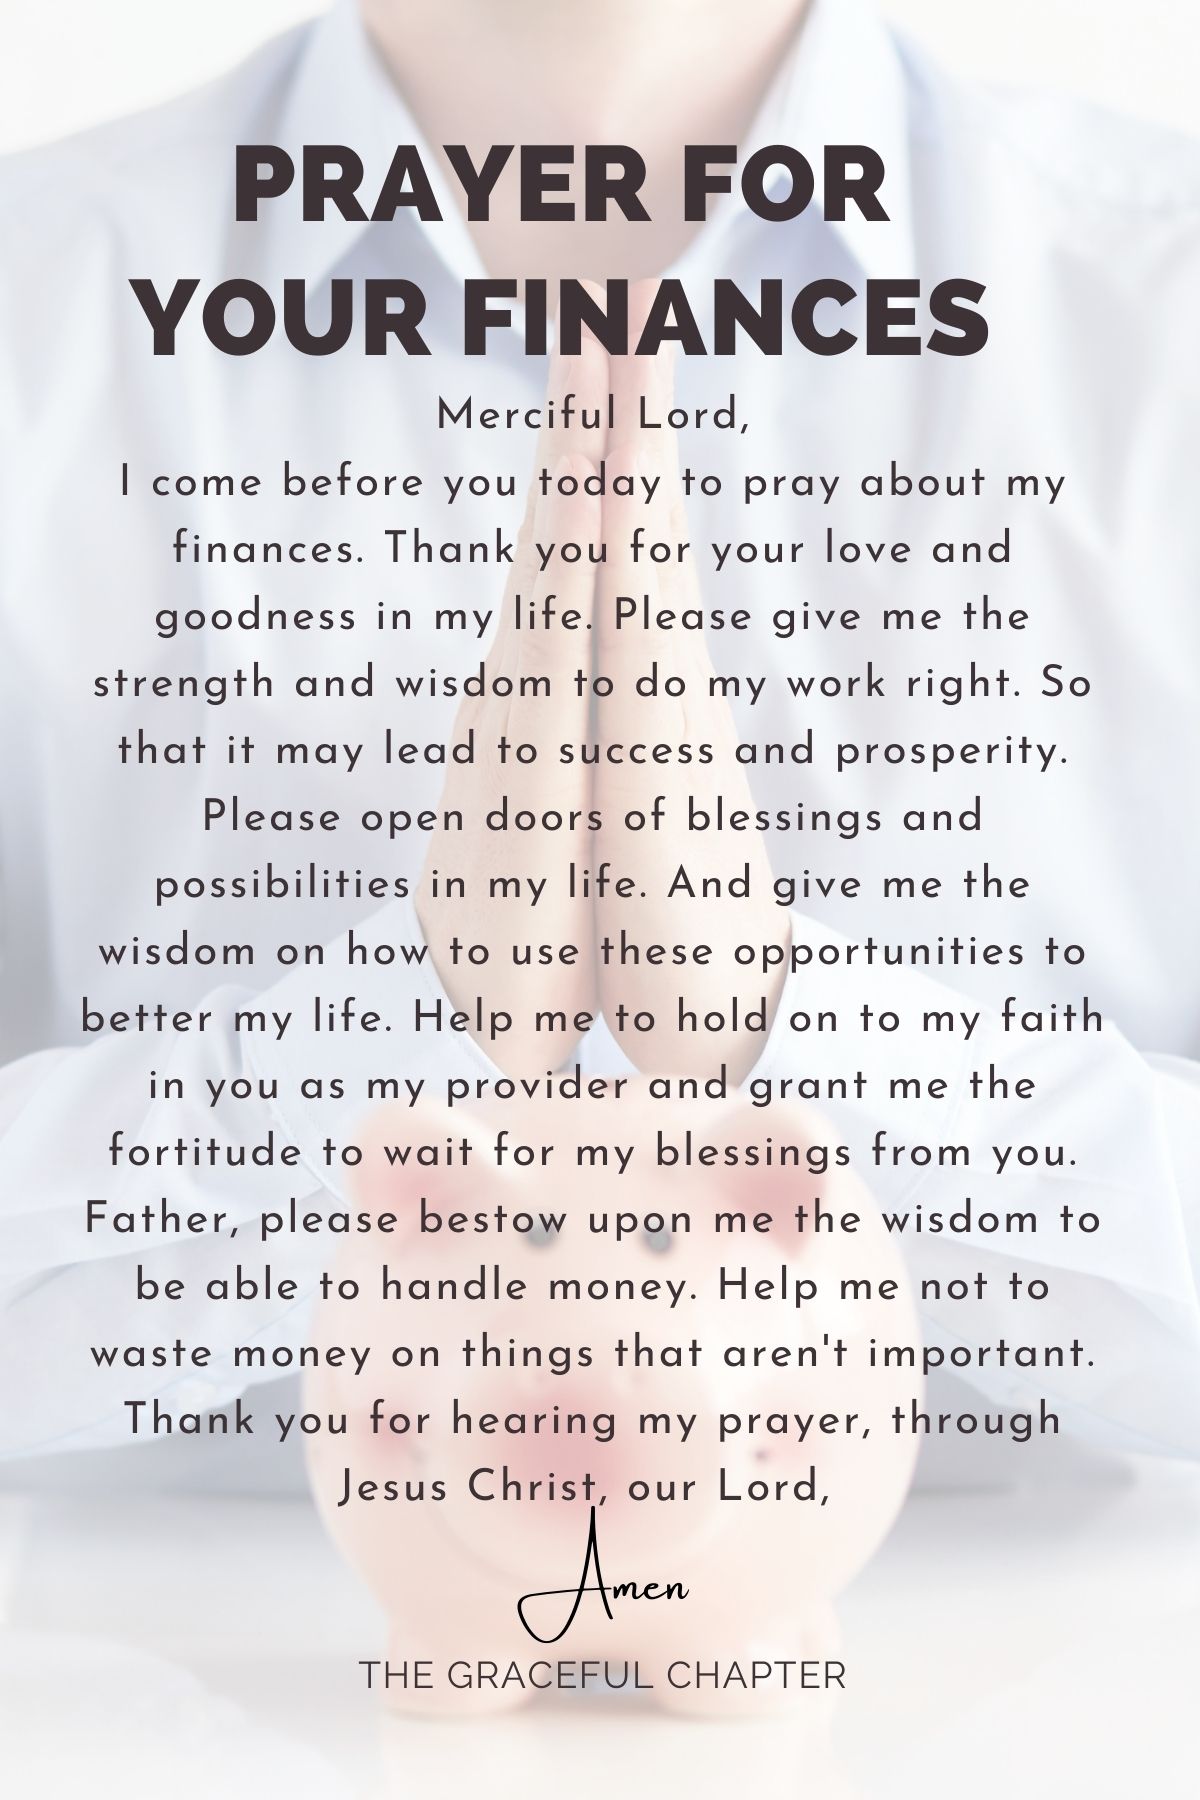 Prayer for your finances